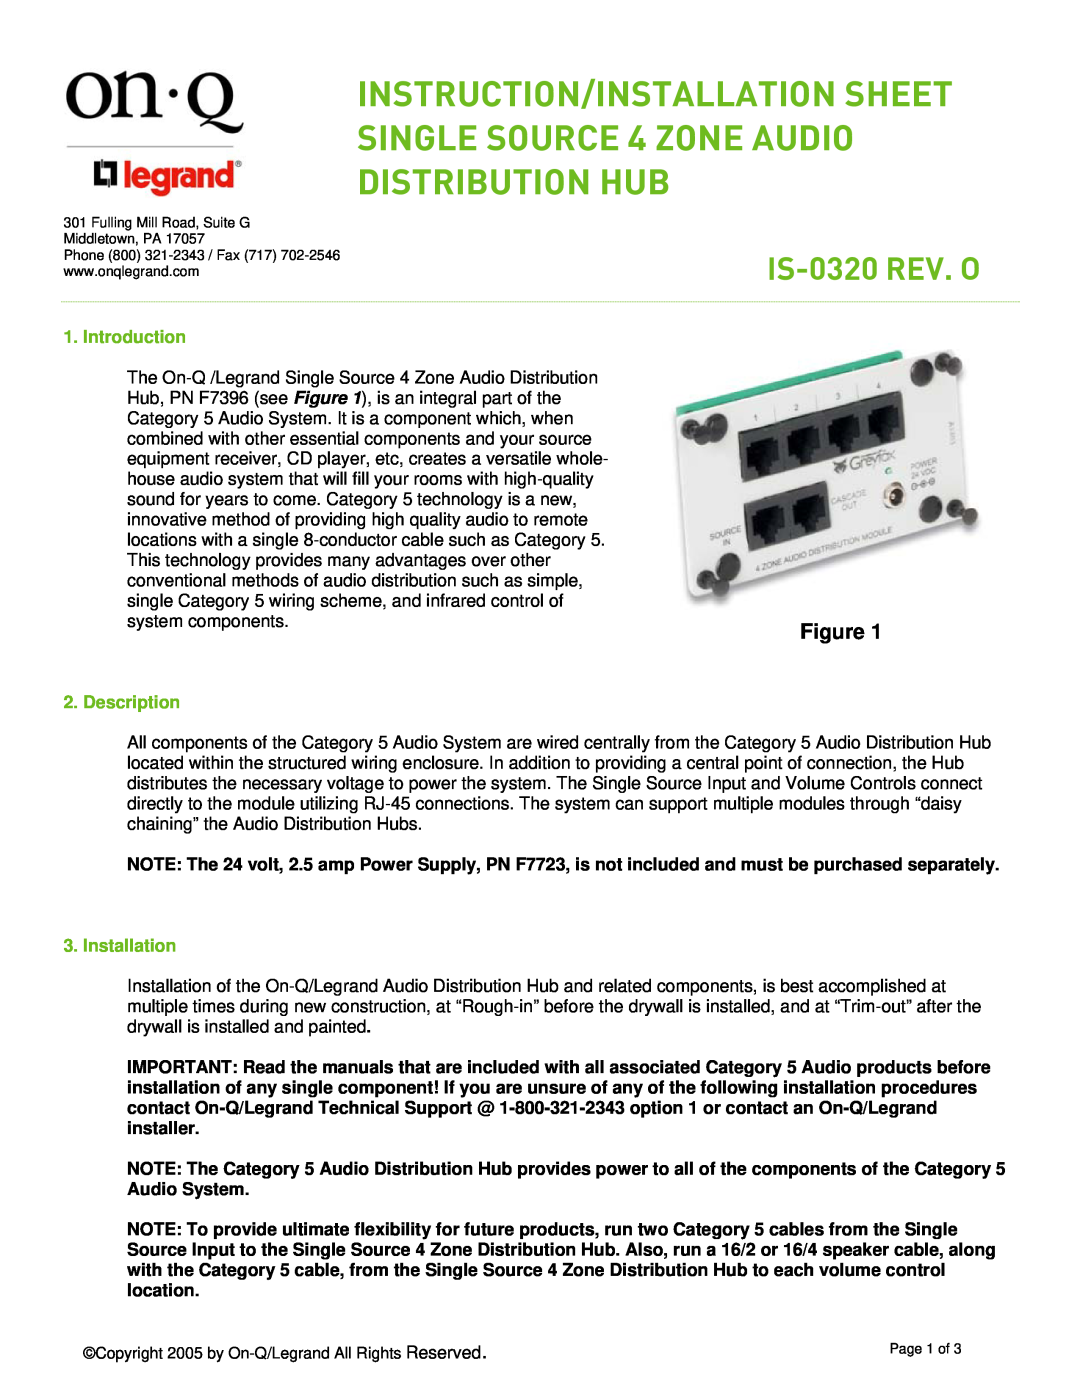 On-Q/Legrand IS-0320 REV. O manual Introduction, Description, Installation 